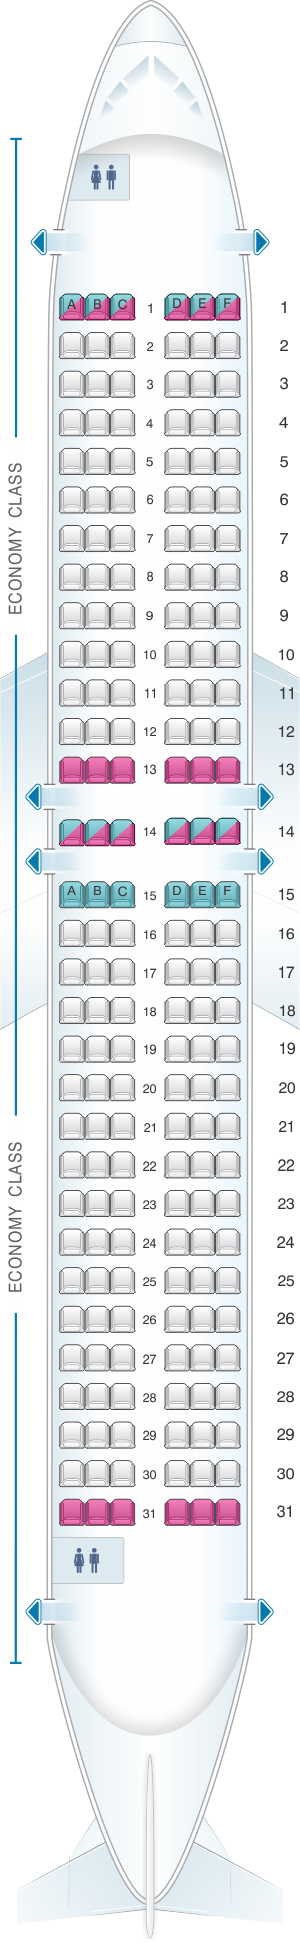 Seat map for Norwegian Boeing B737 800